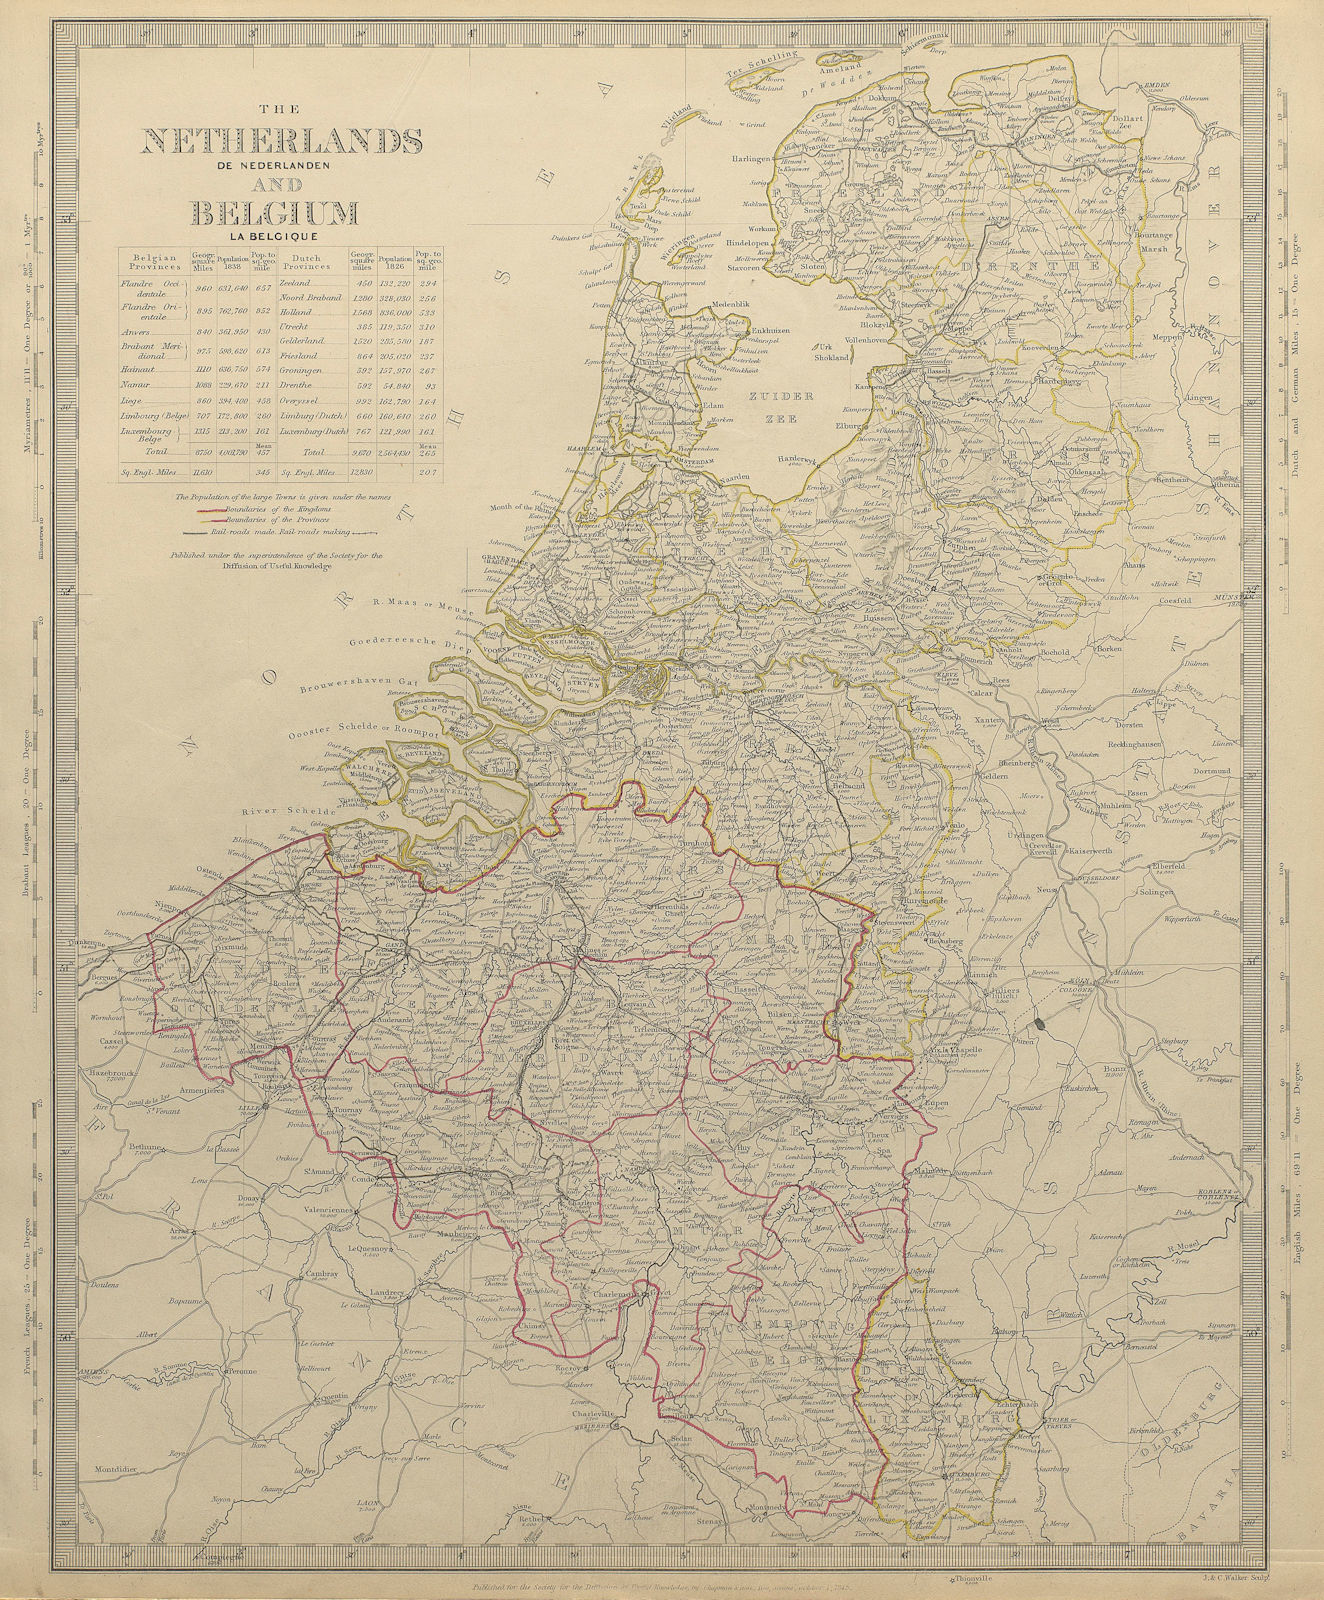 NETHERLANDS & BELGIUM w/ railways in use & under construction. SDUK 1844 map